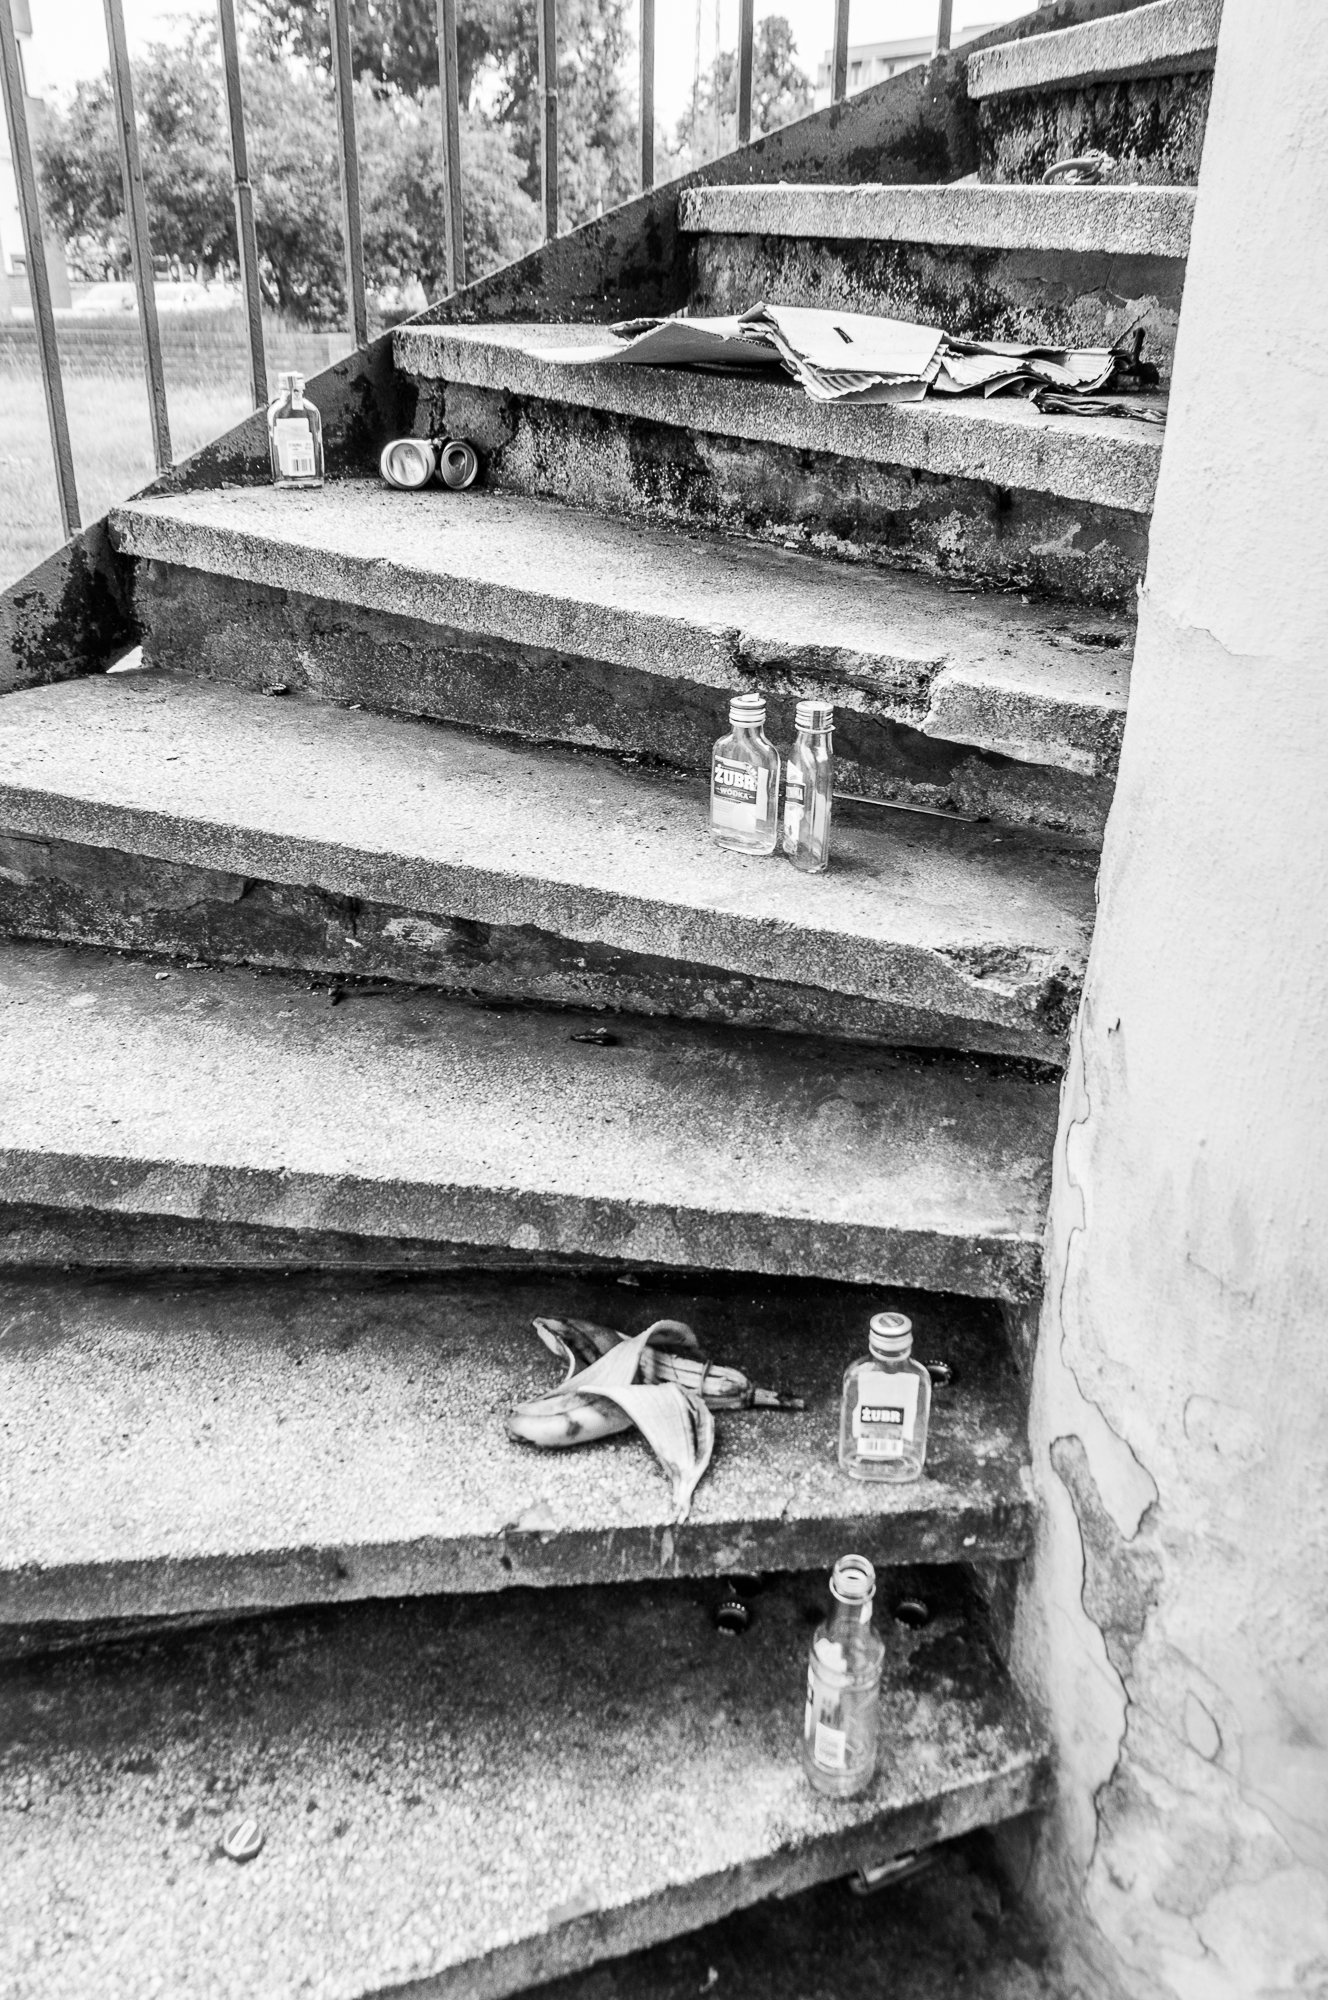 Adam Mazek Photography Warsaw (Warszawa) 2018. Post: "Aggression" Bottles on the stairs.